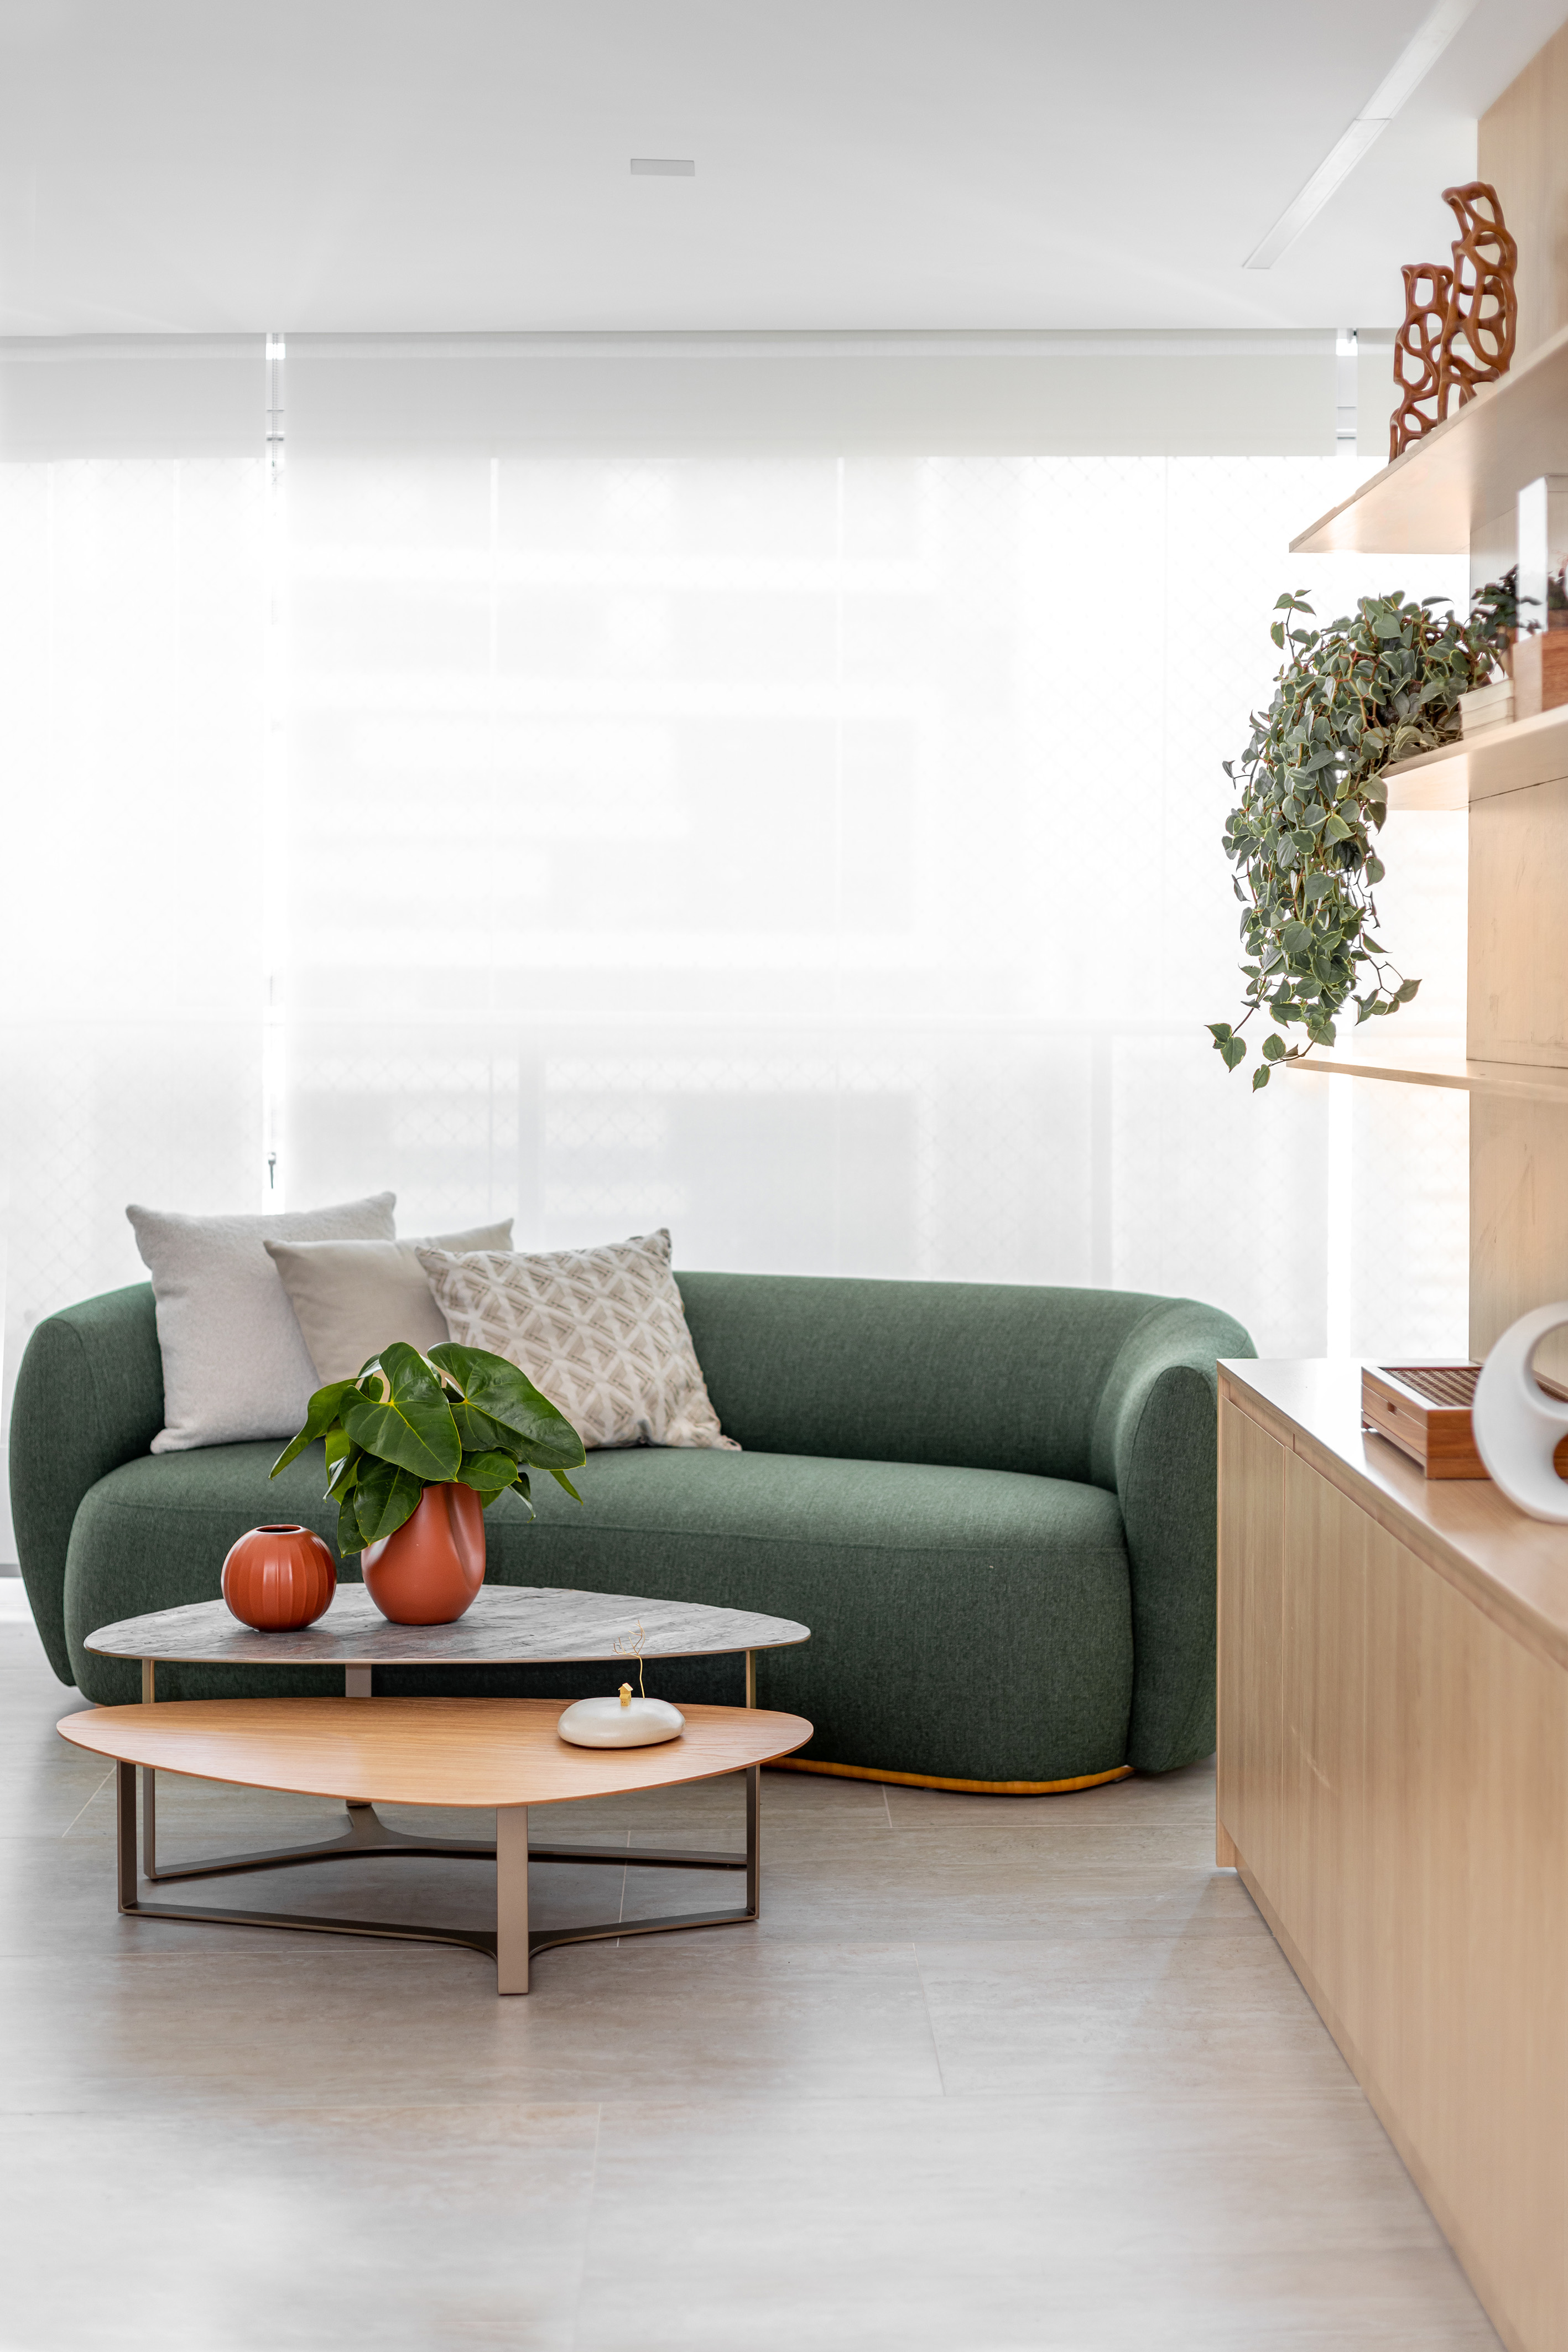 Projeto de NOP Arquitetura. Na foto, sala com sofá curvo verde.